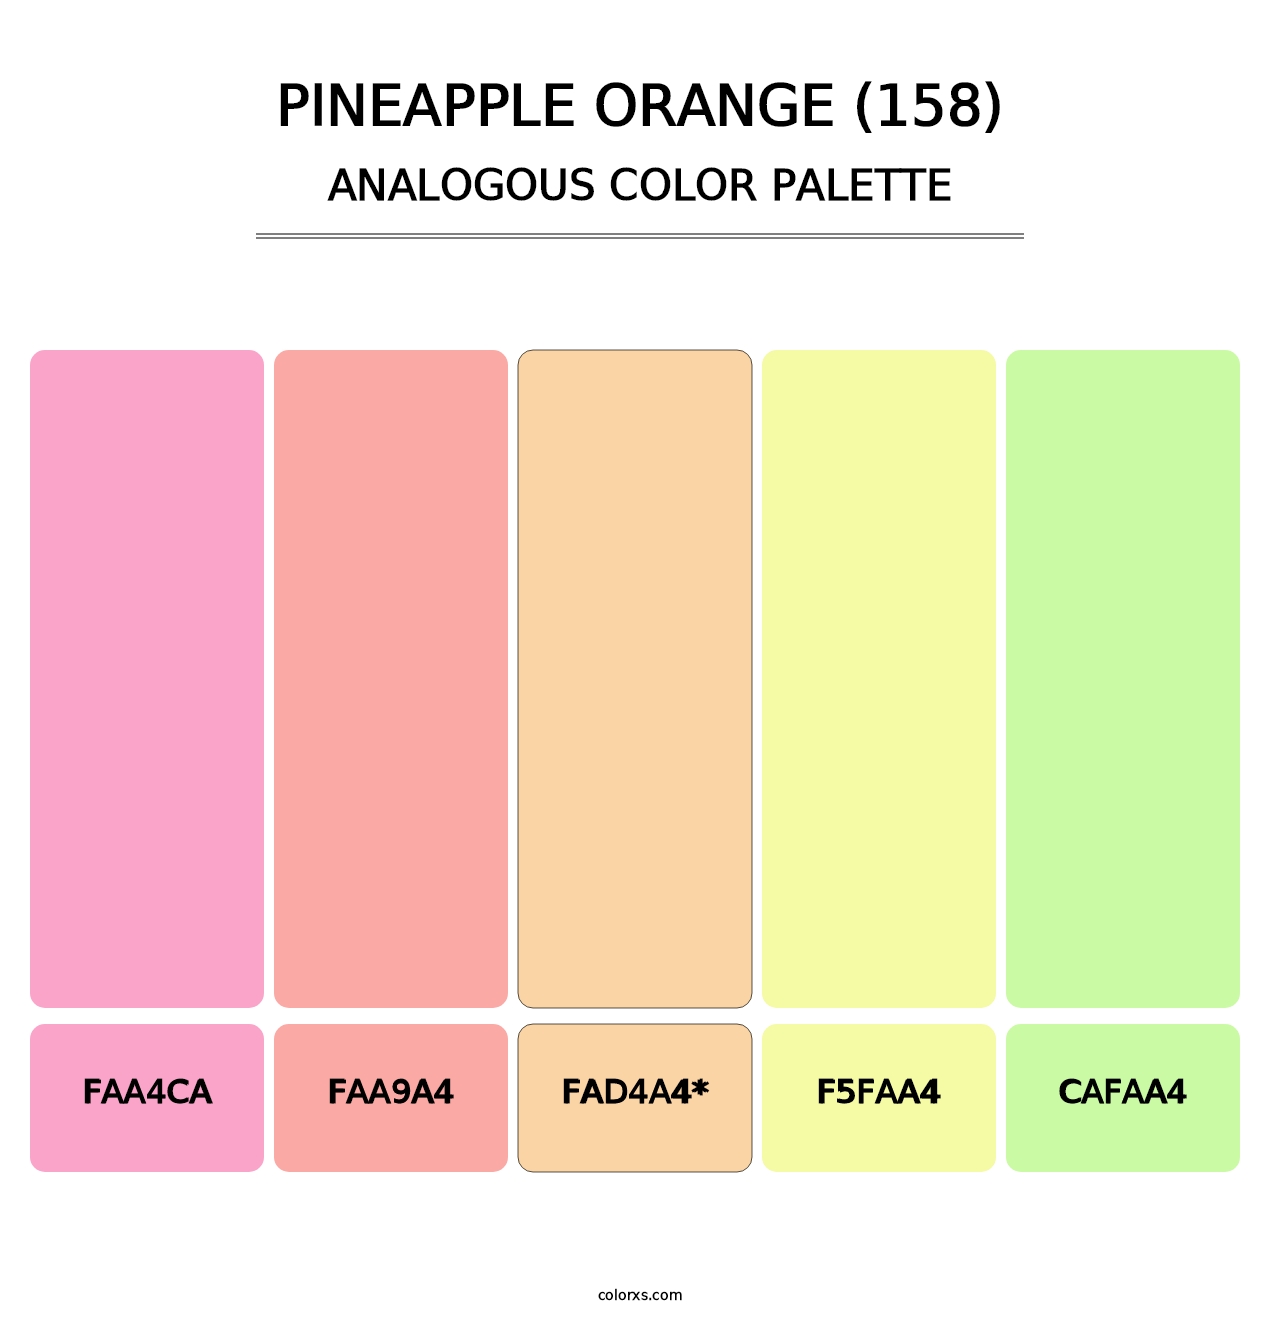 Pineapple Orange (158) - Analogous Color Palette